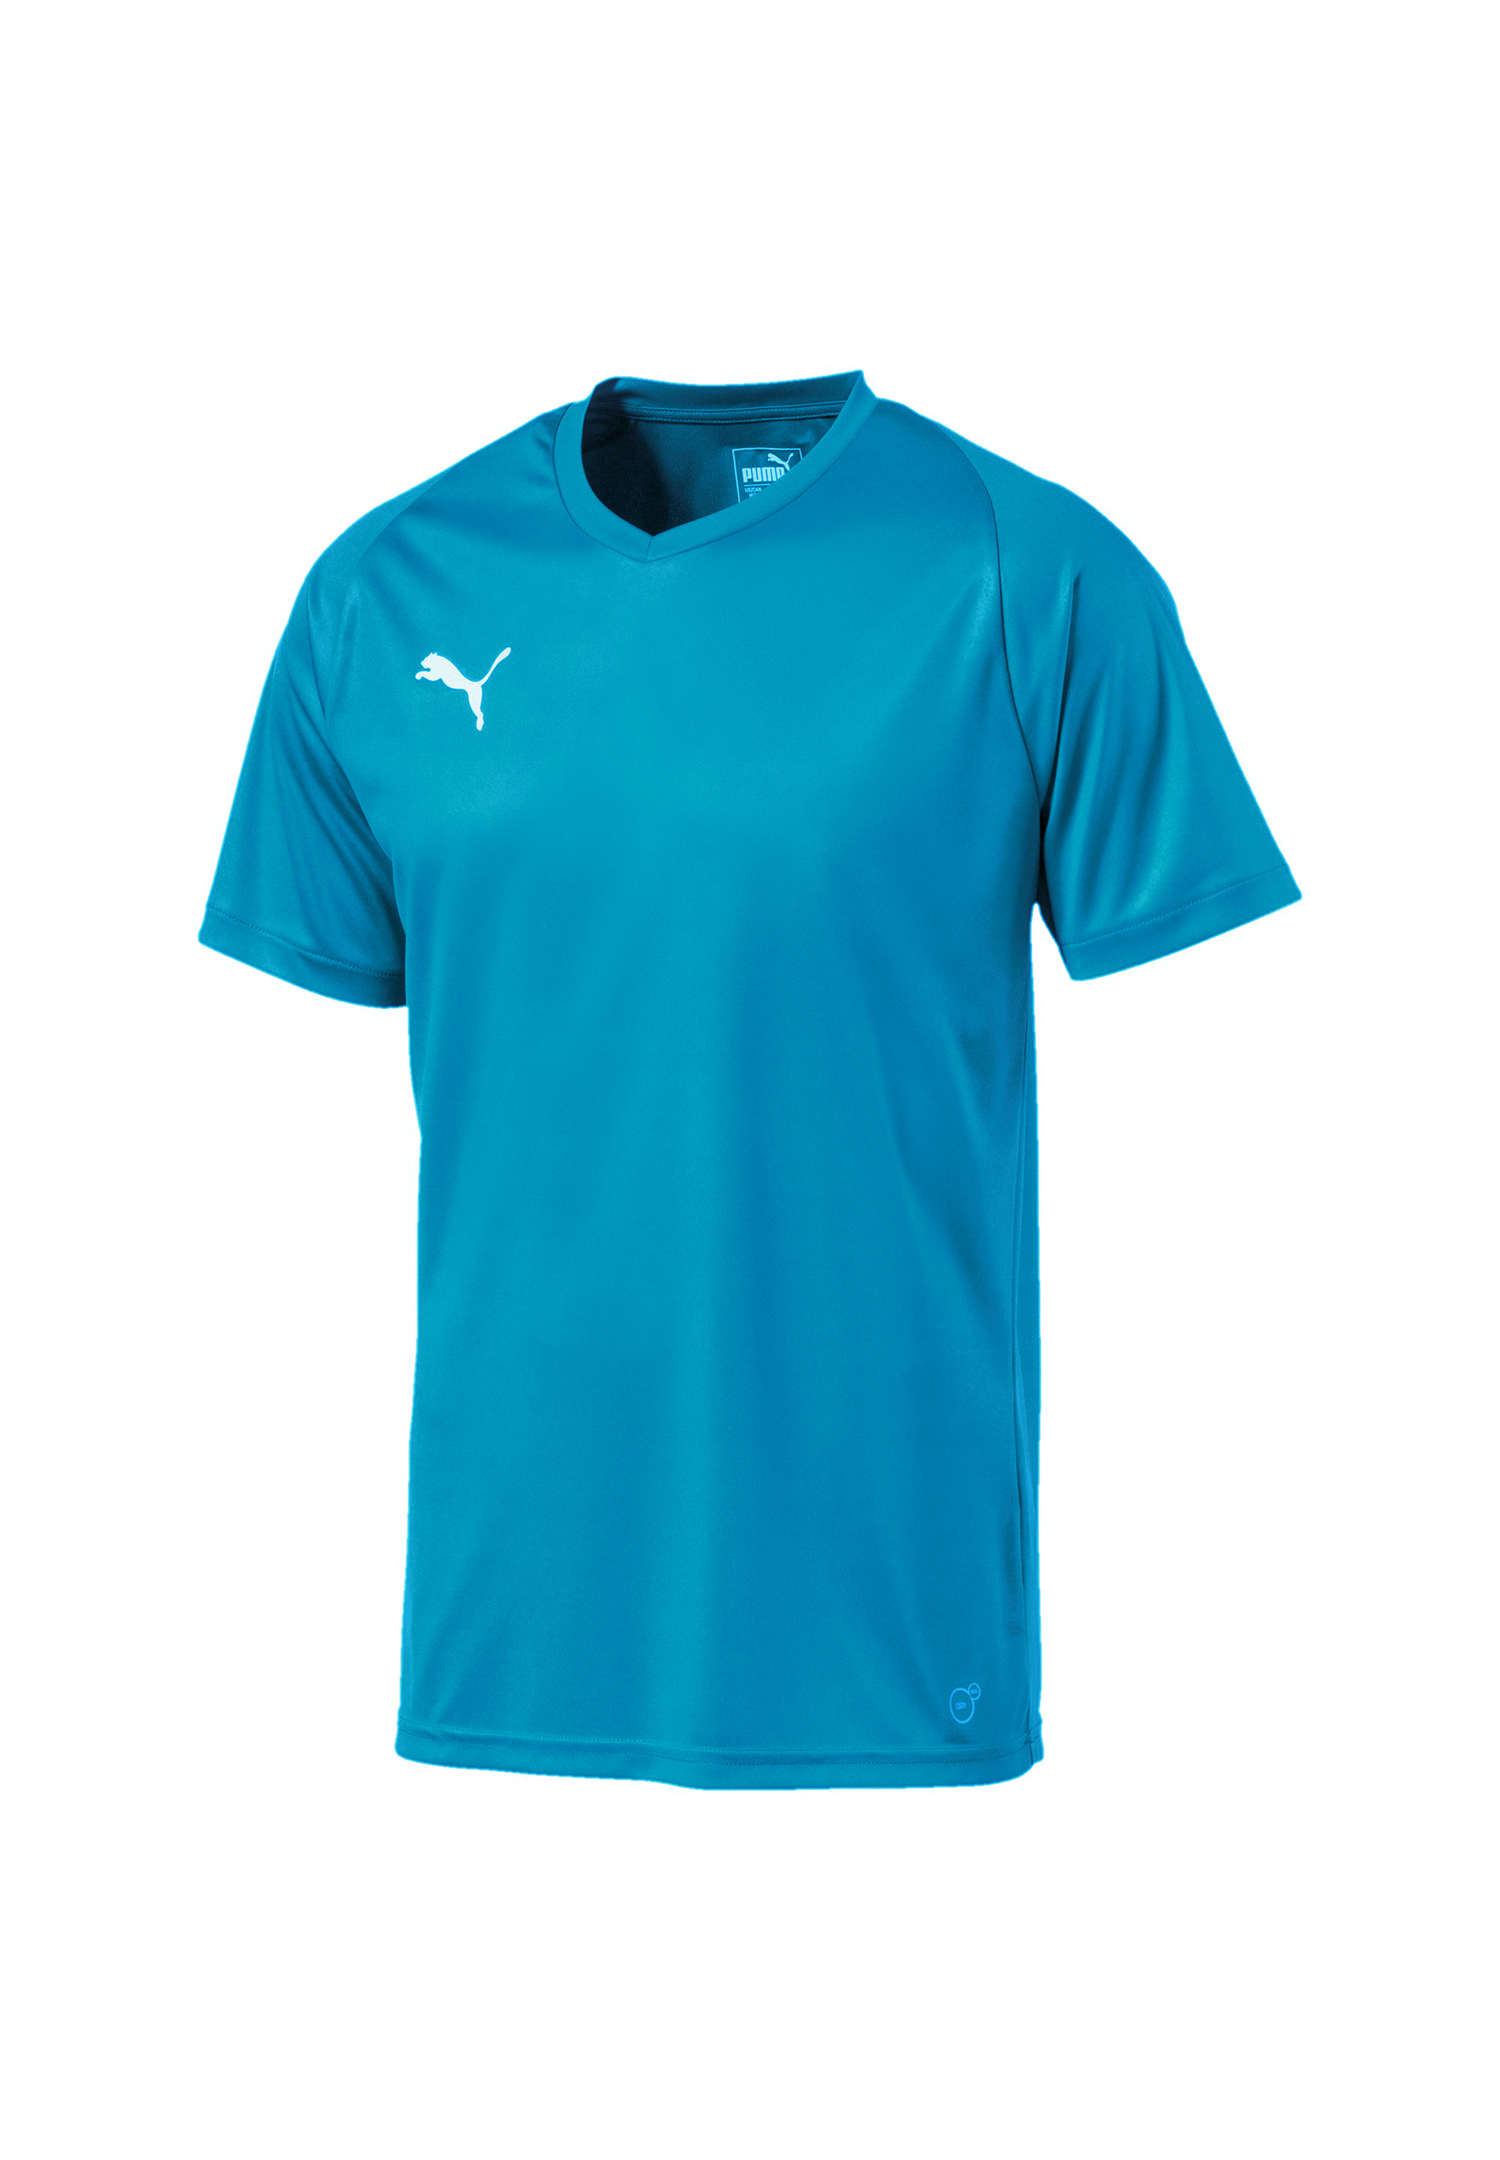 PUMA Unisex Kinder LIGA Jersey Core JR Trikot T-Shirt 703509 Blau 